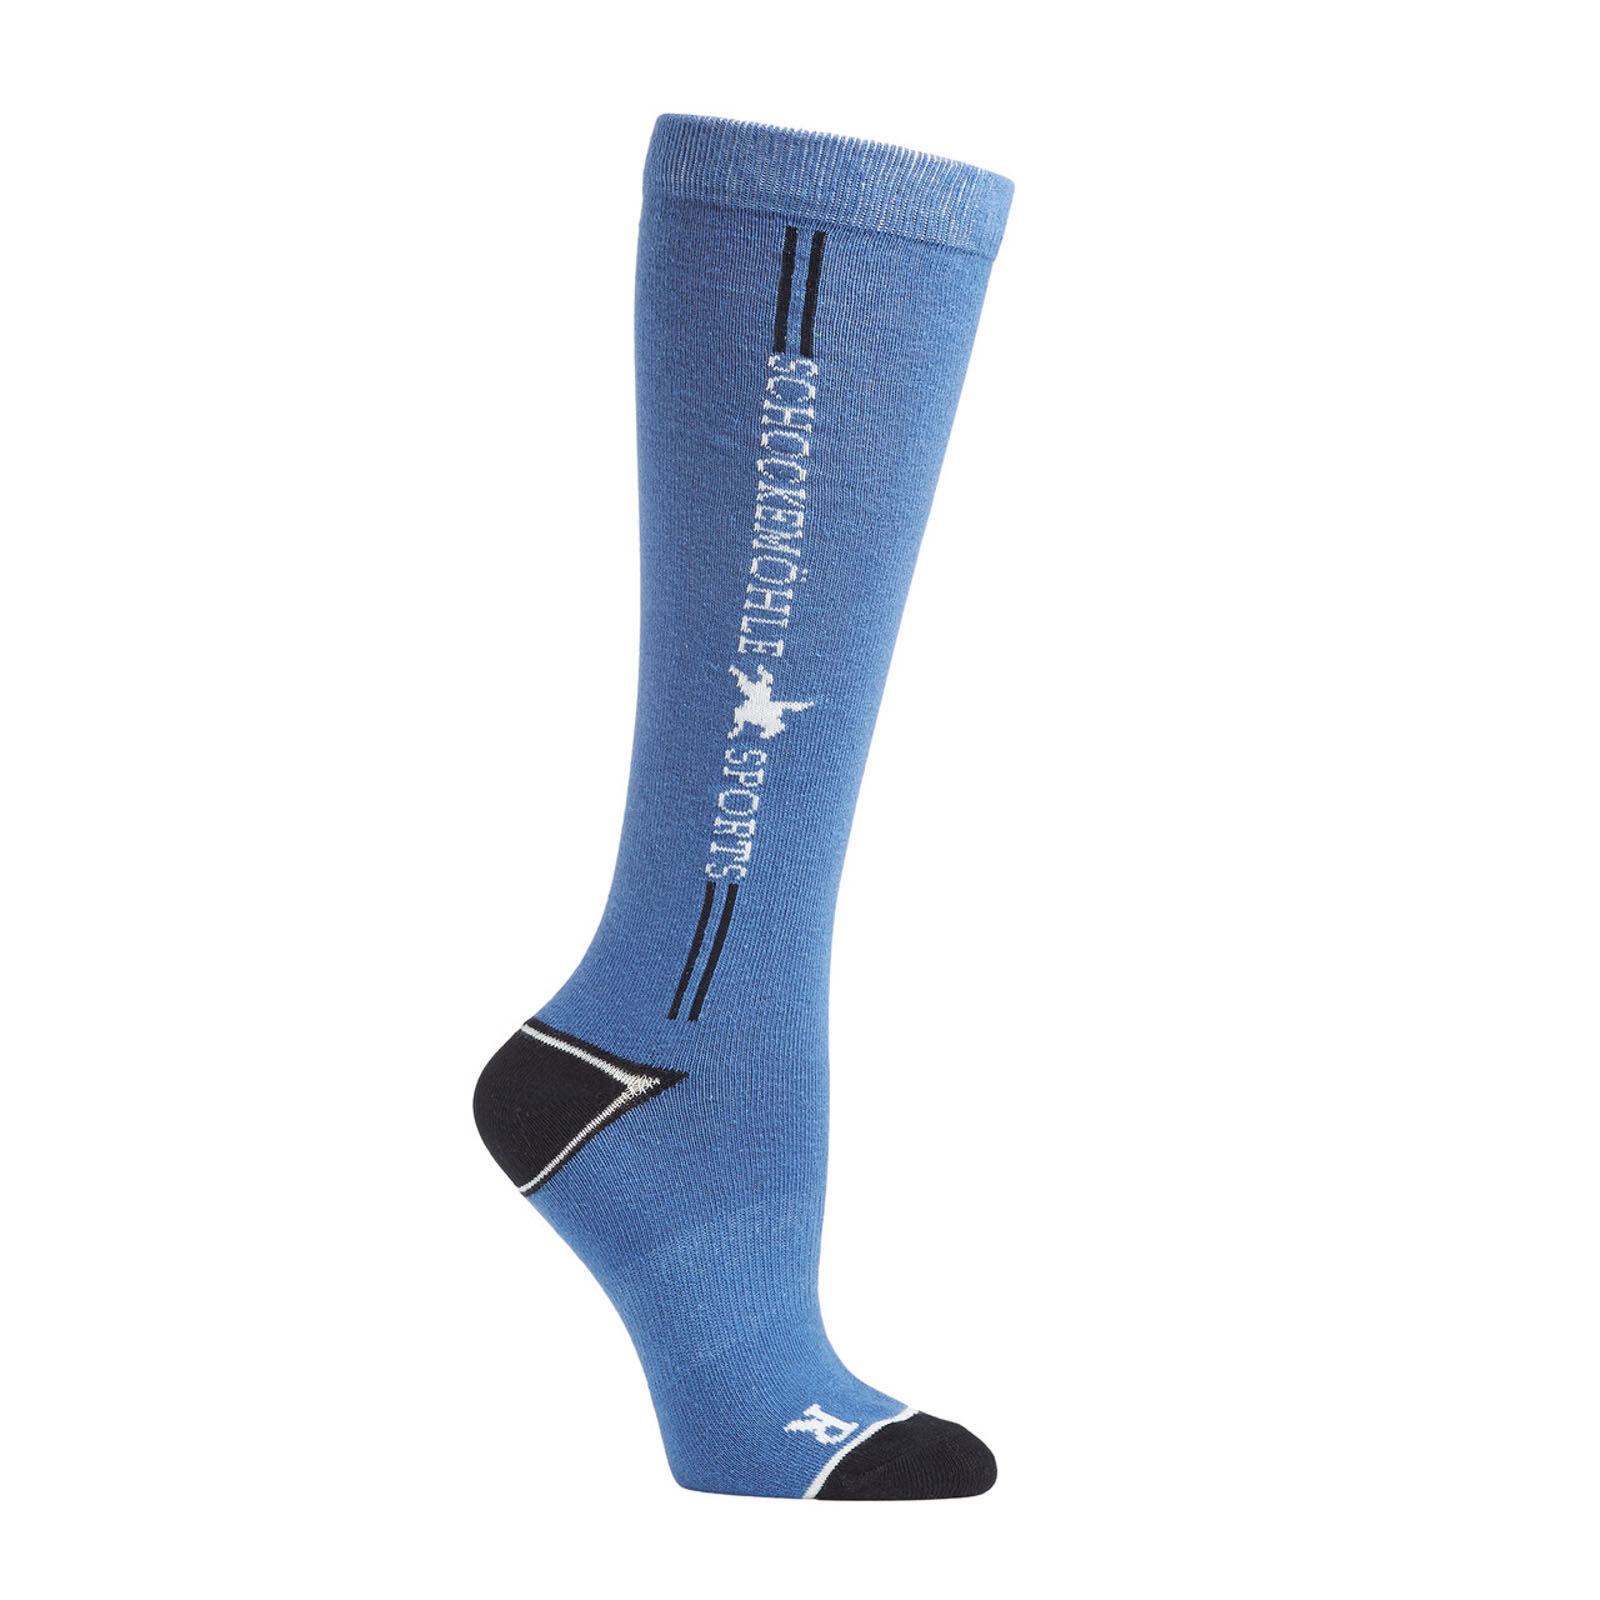 USG Orginal Sockies Riding Socks Check Stockings Riding Socks 454 Blue/H 'Blue/Black 